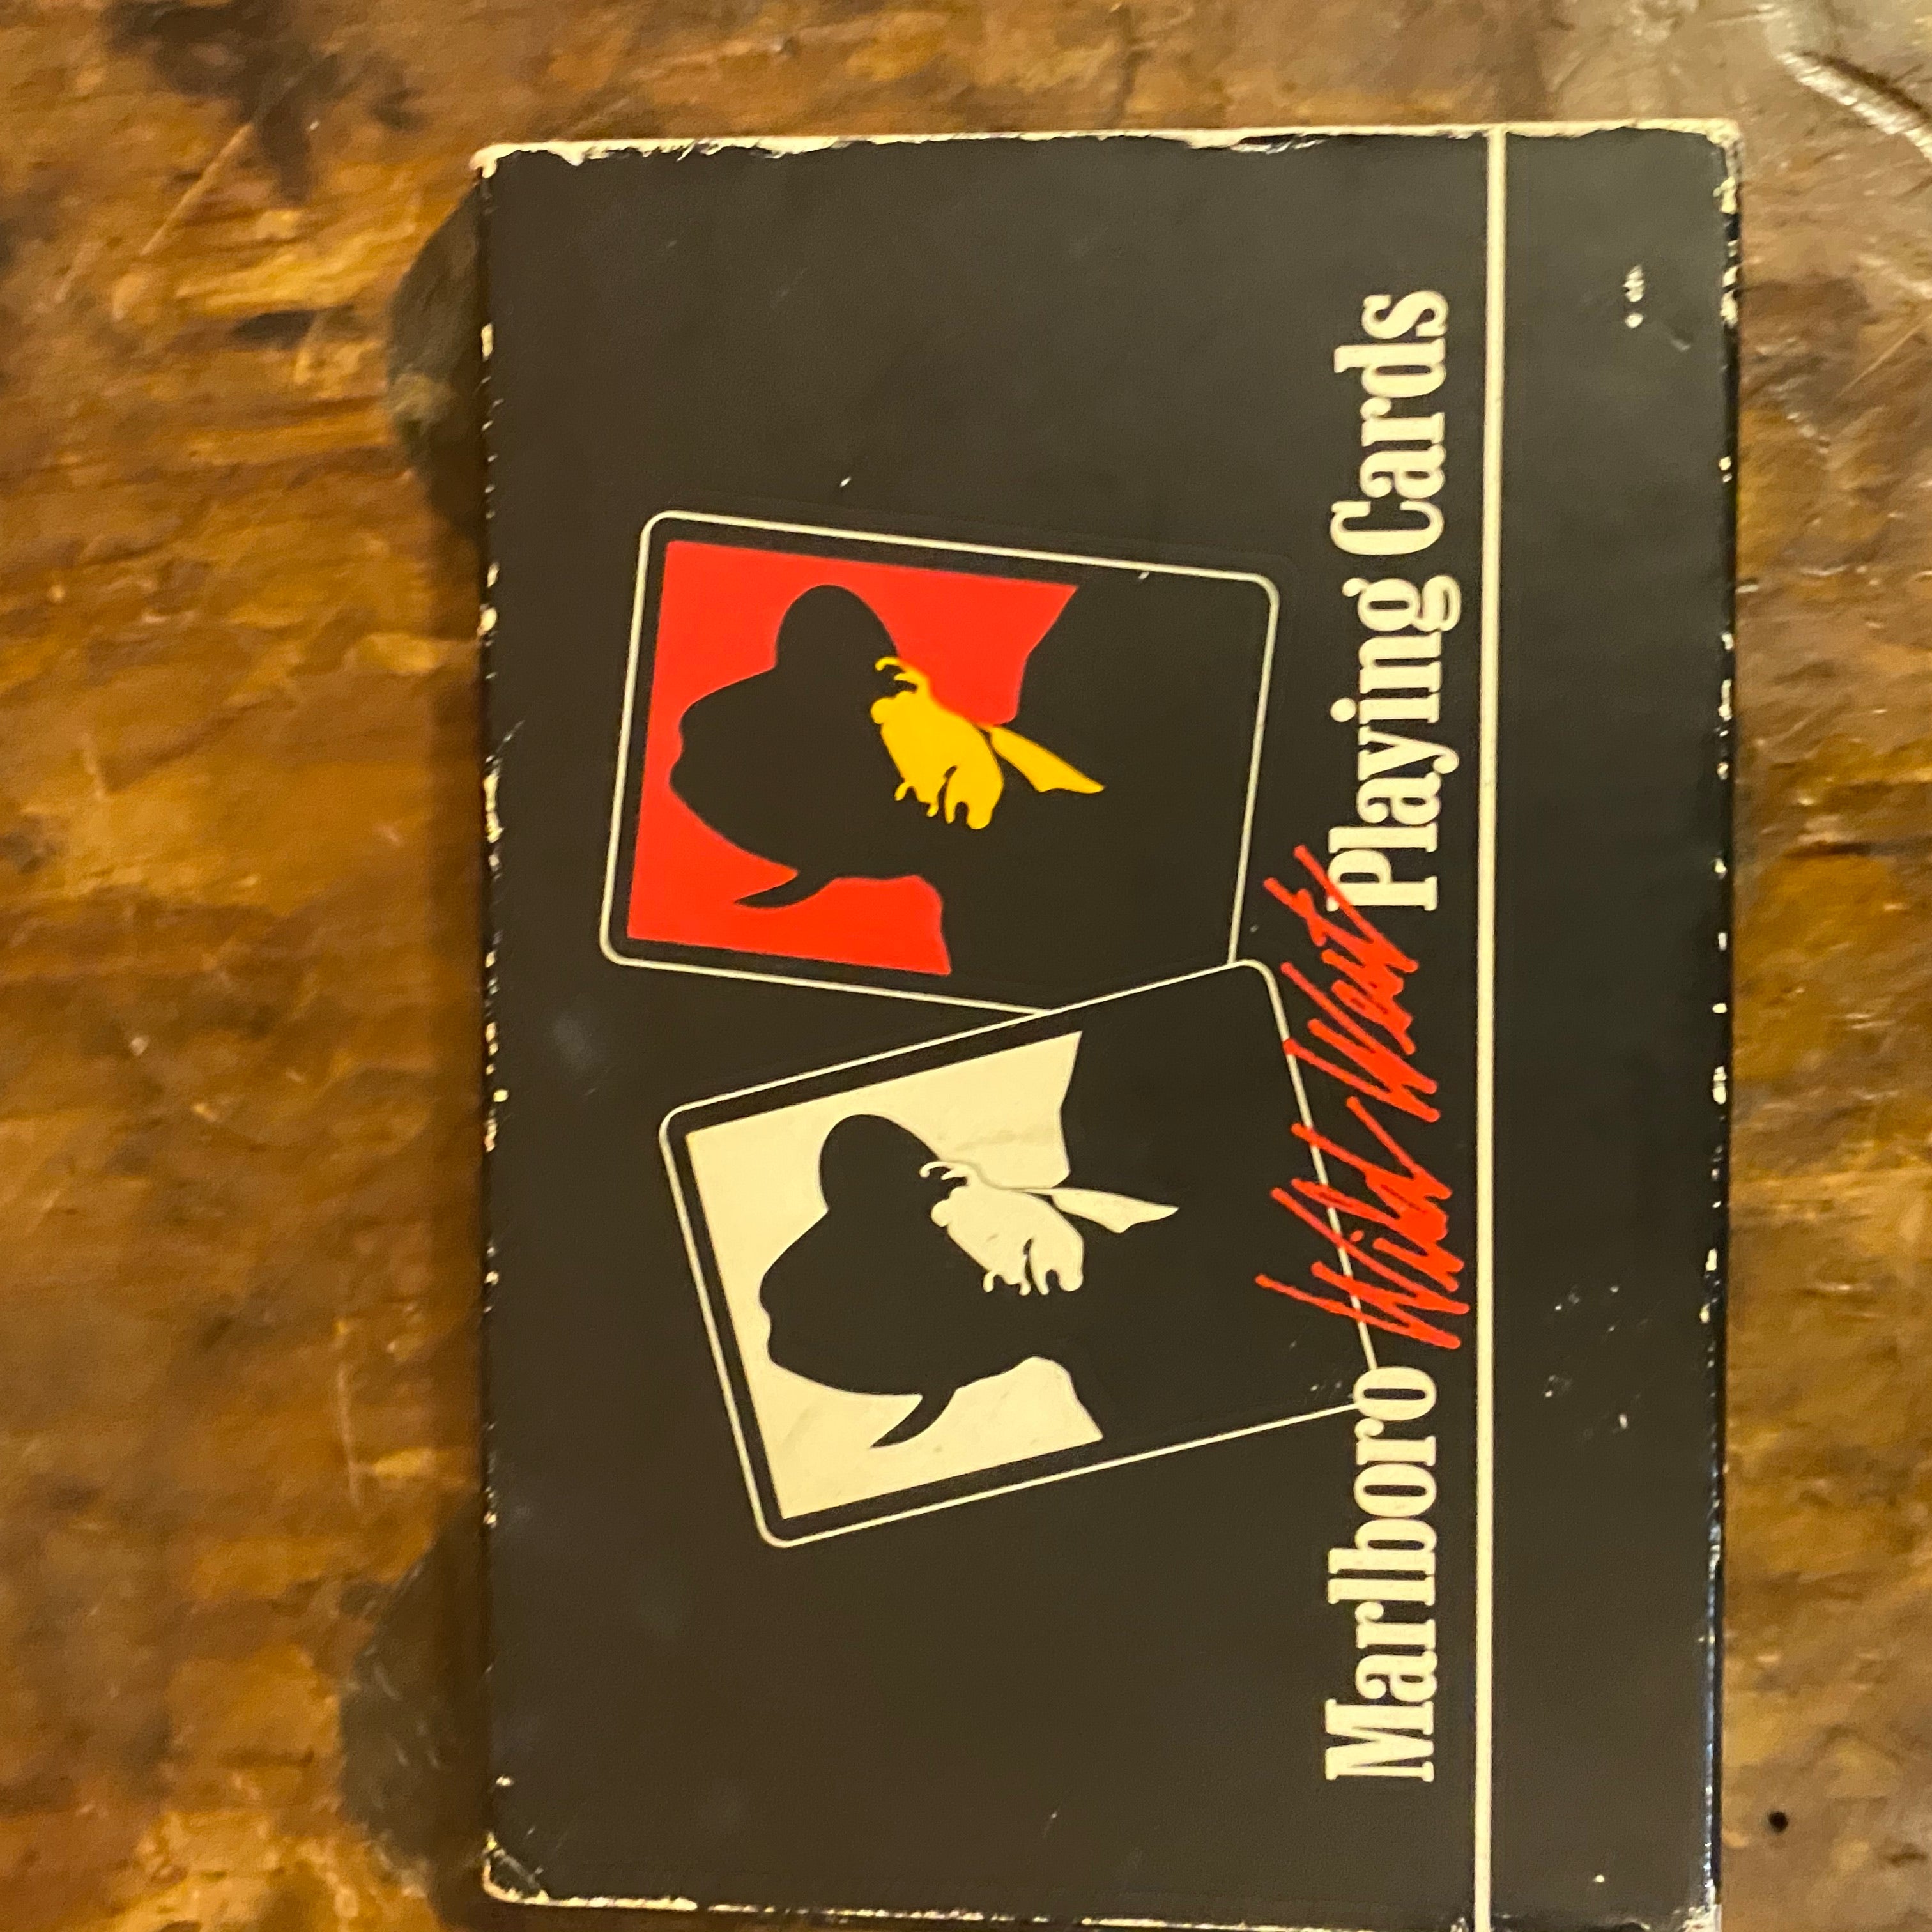 Retro Marlboro playing cards in case!